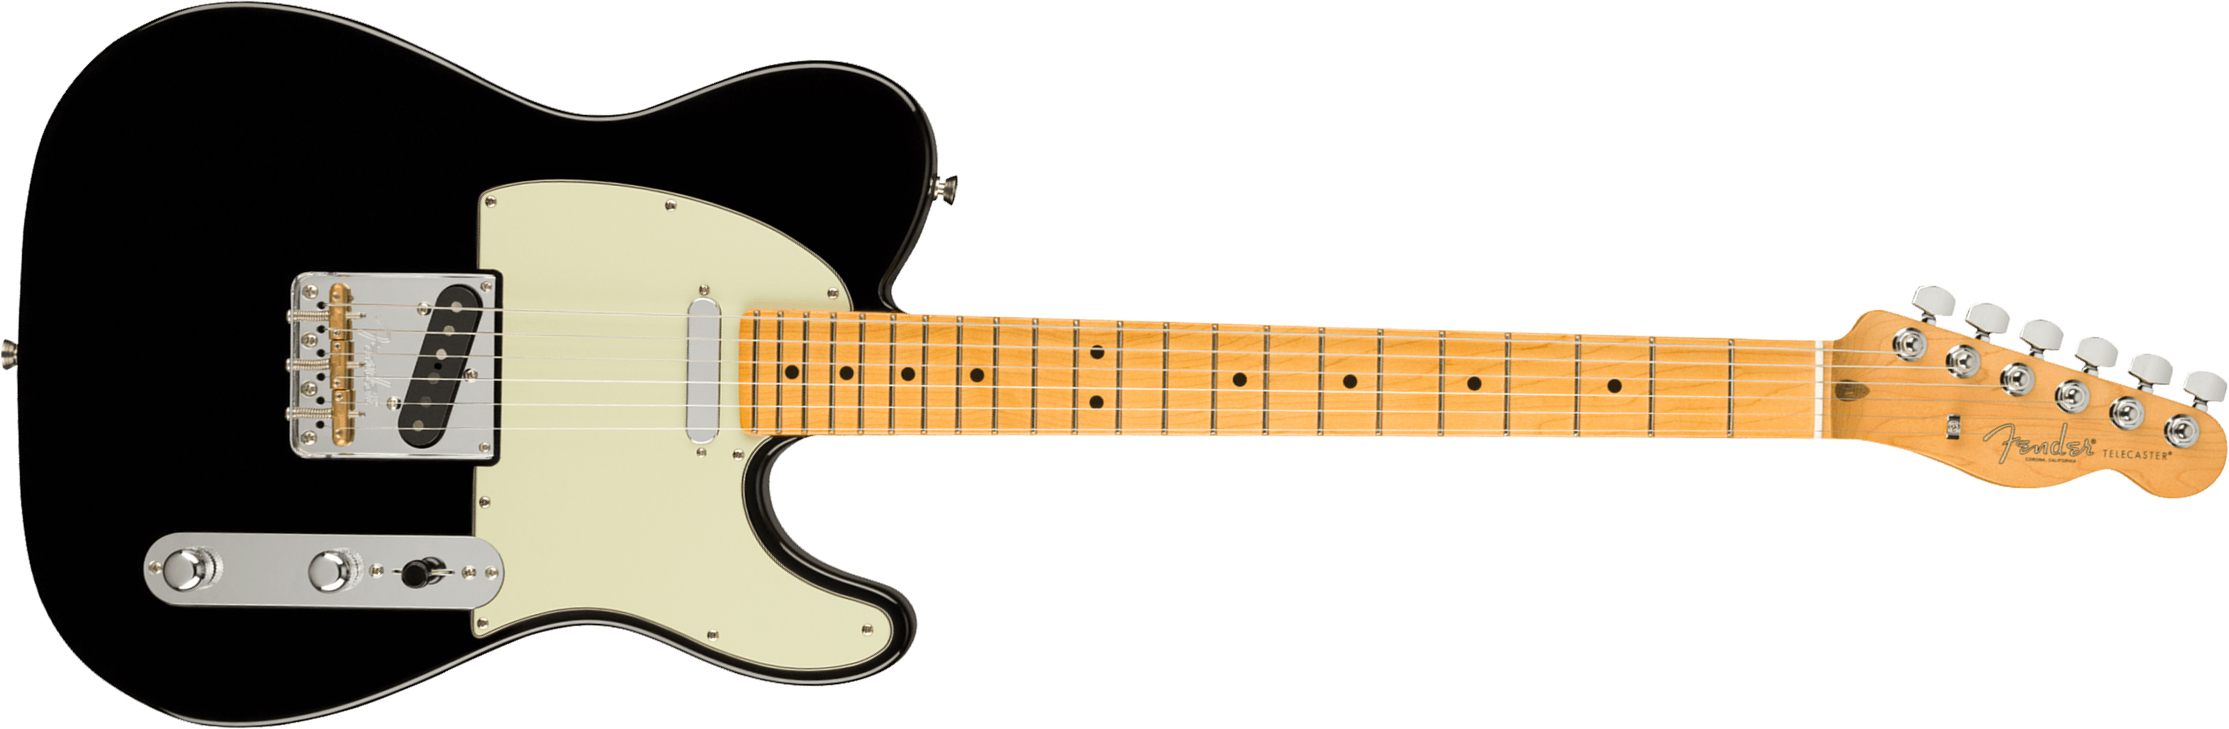 Fender Tele American Professional Ii Usa Mn - Black - Guitarra eléctrica con forma de tel - Main picture